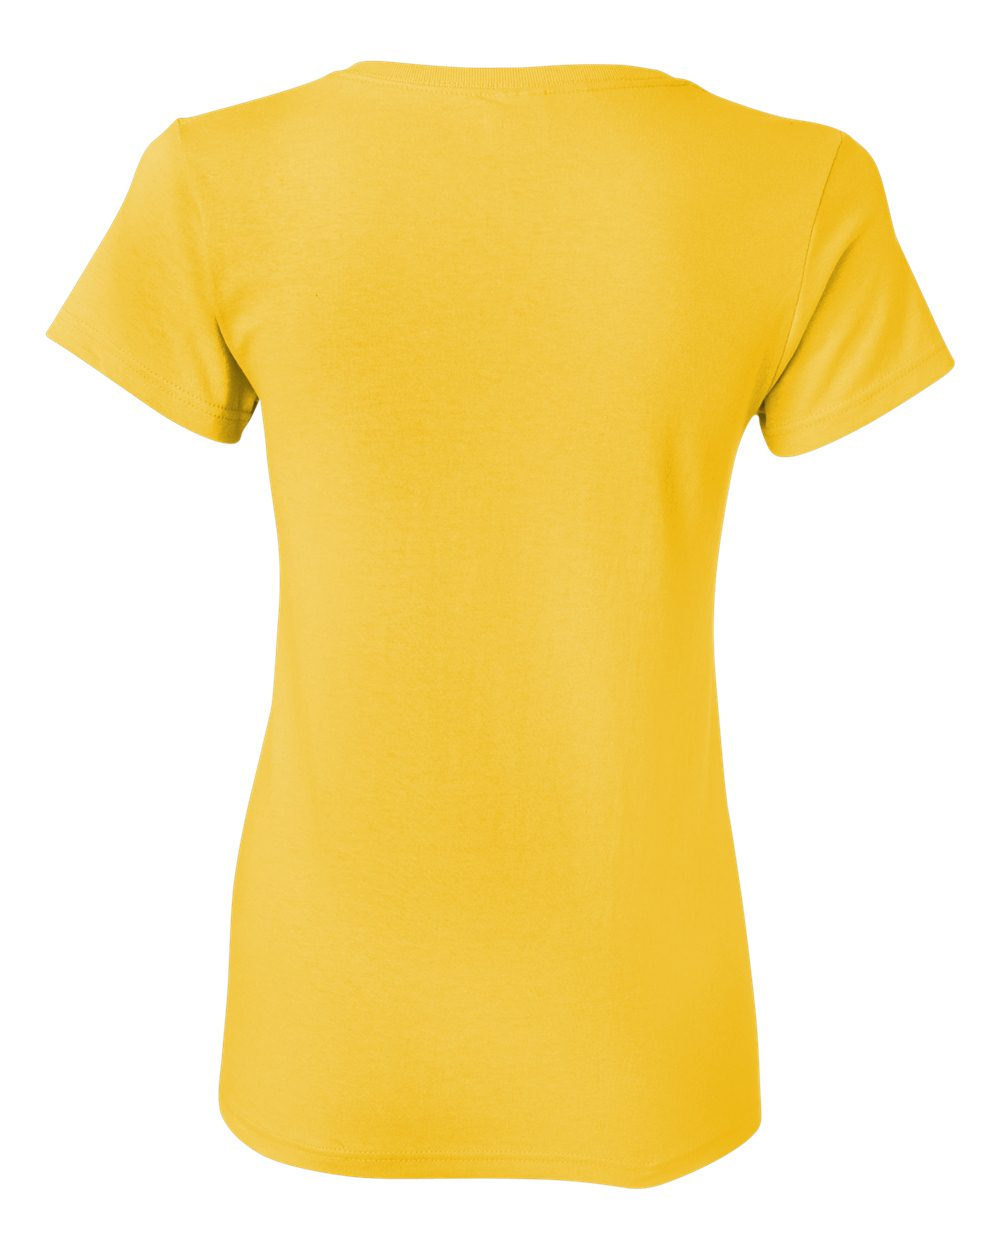 Corona Bottle Yellow T Shirt Womens - Shirts